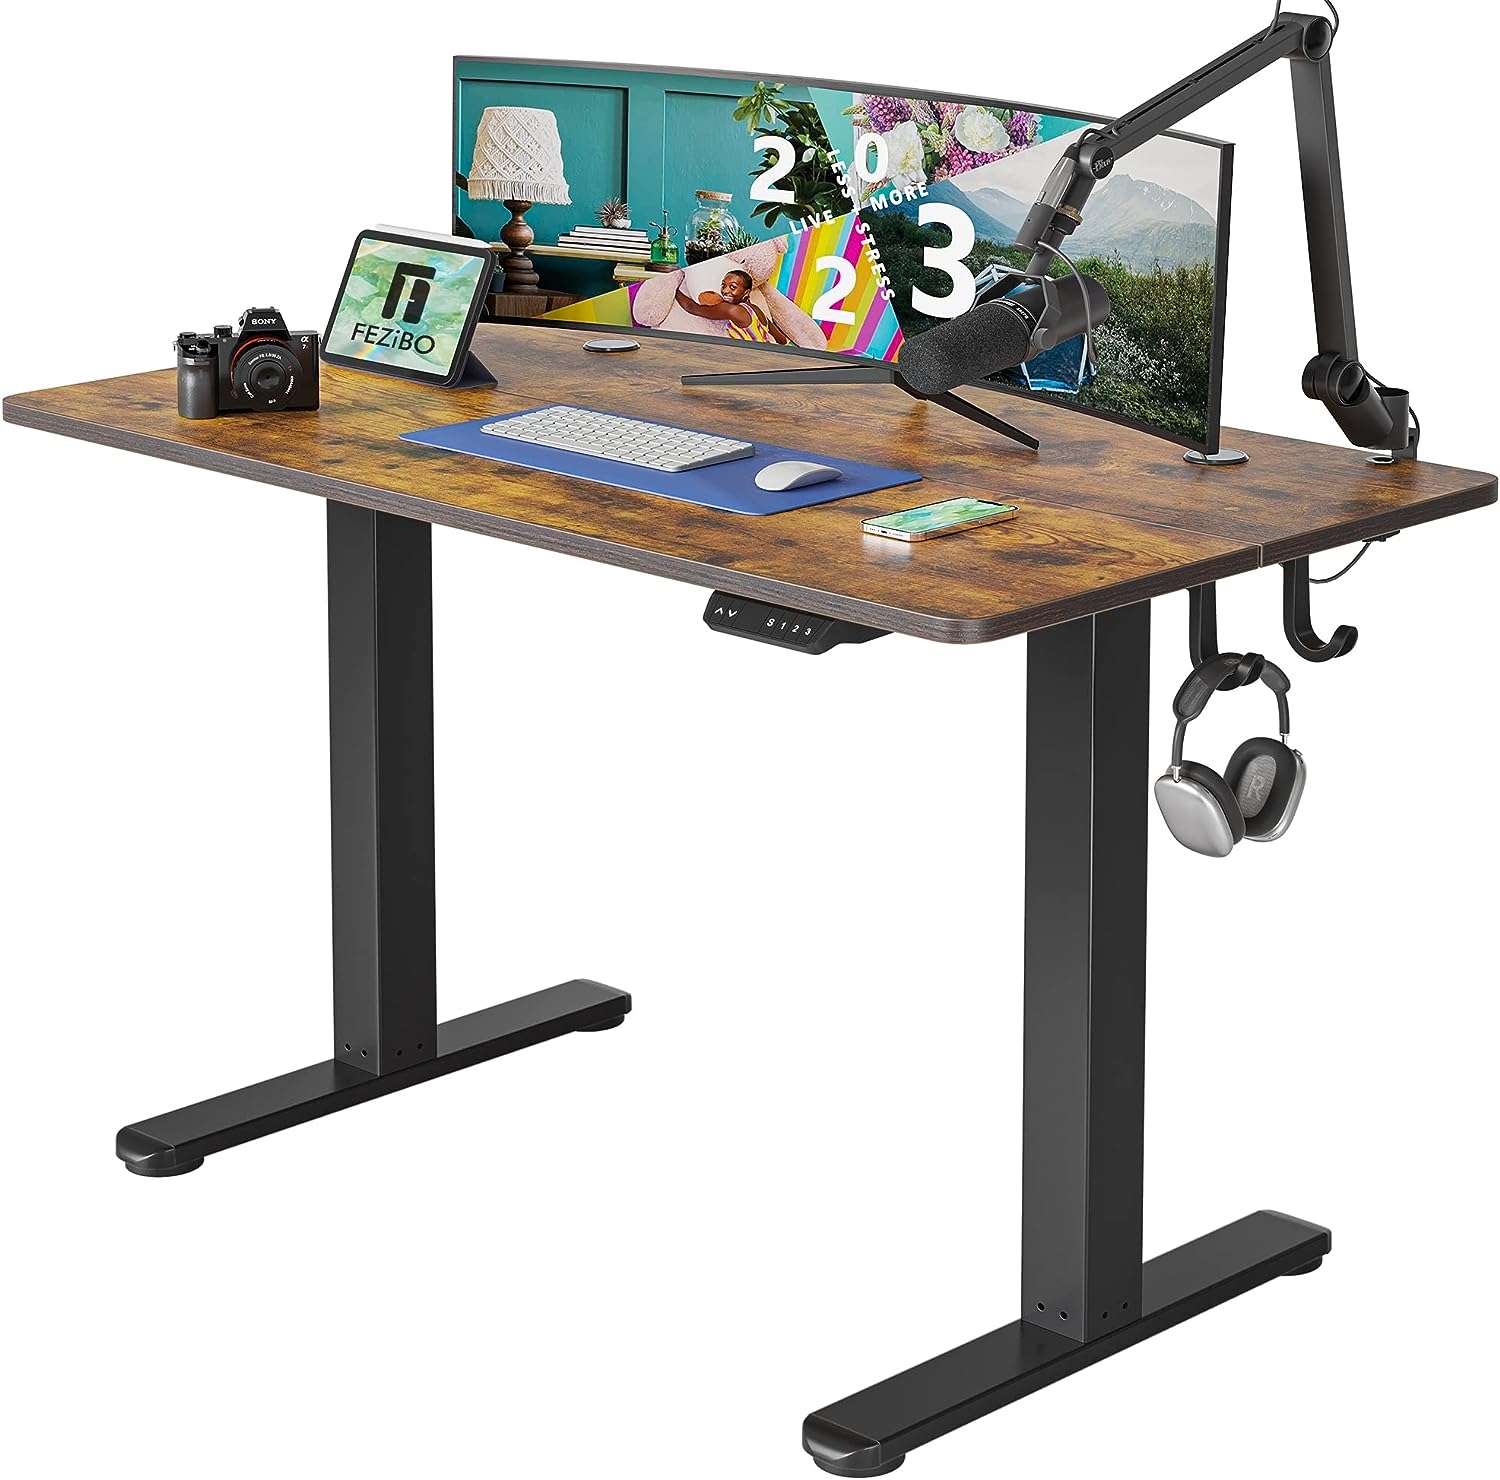 FEZIBO Height Adjustable Standing Desk | DeviceDaily.com